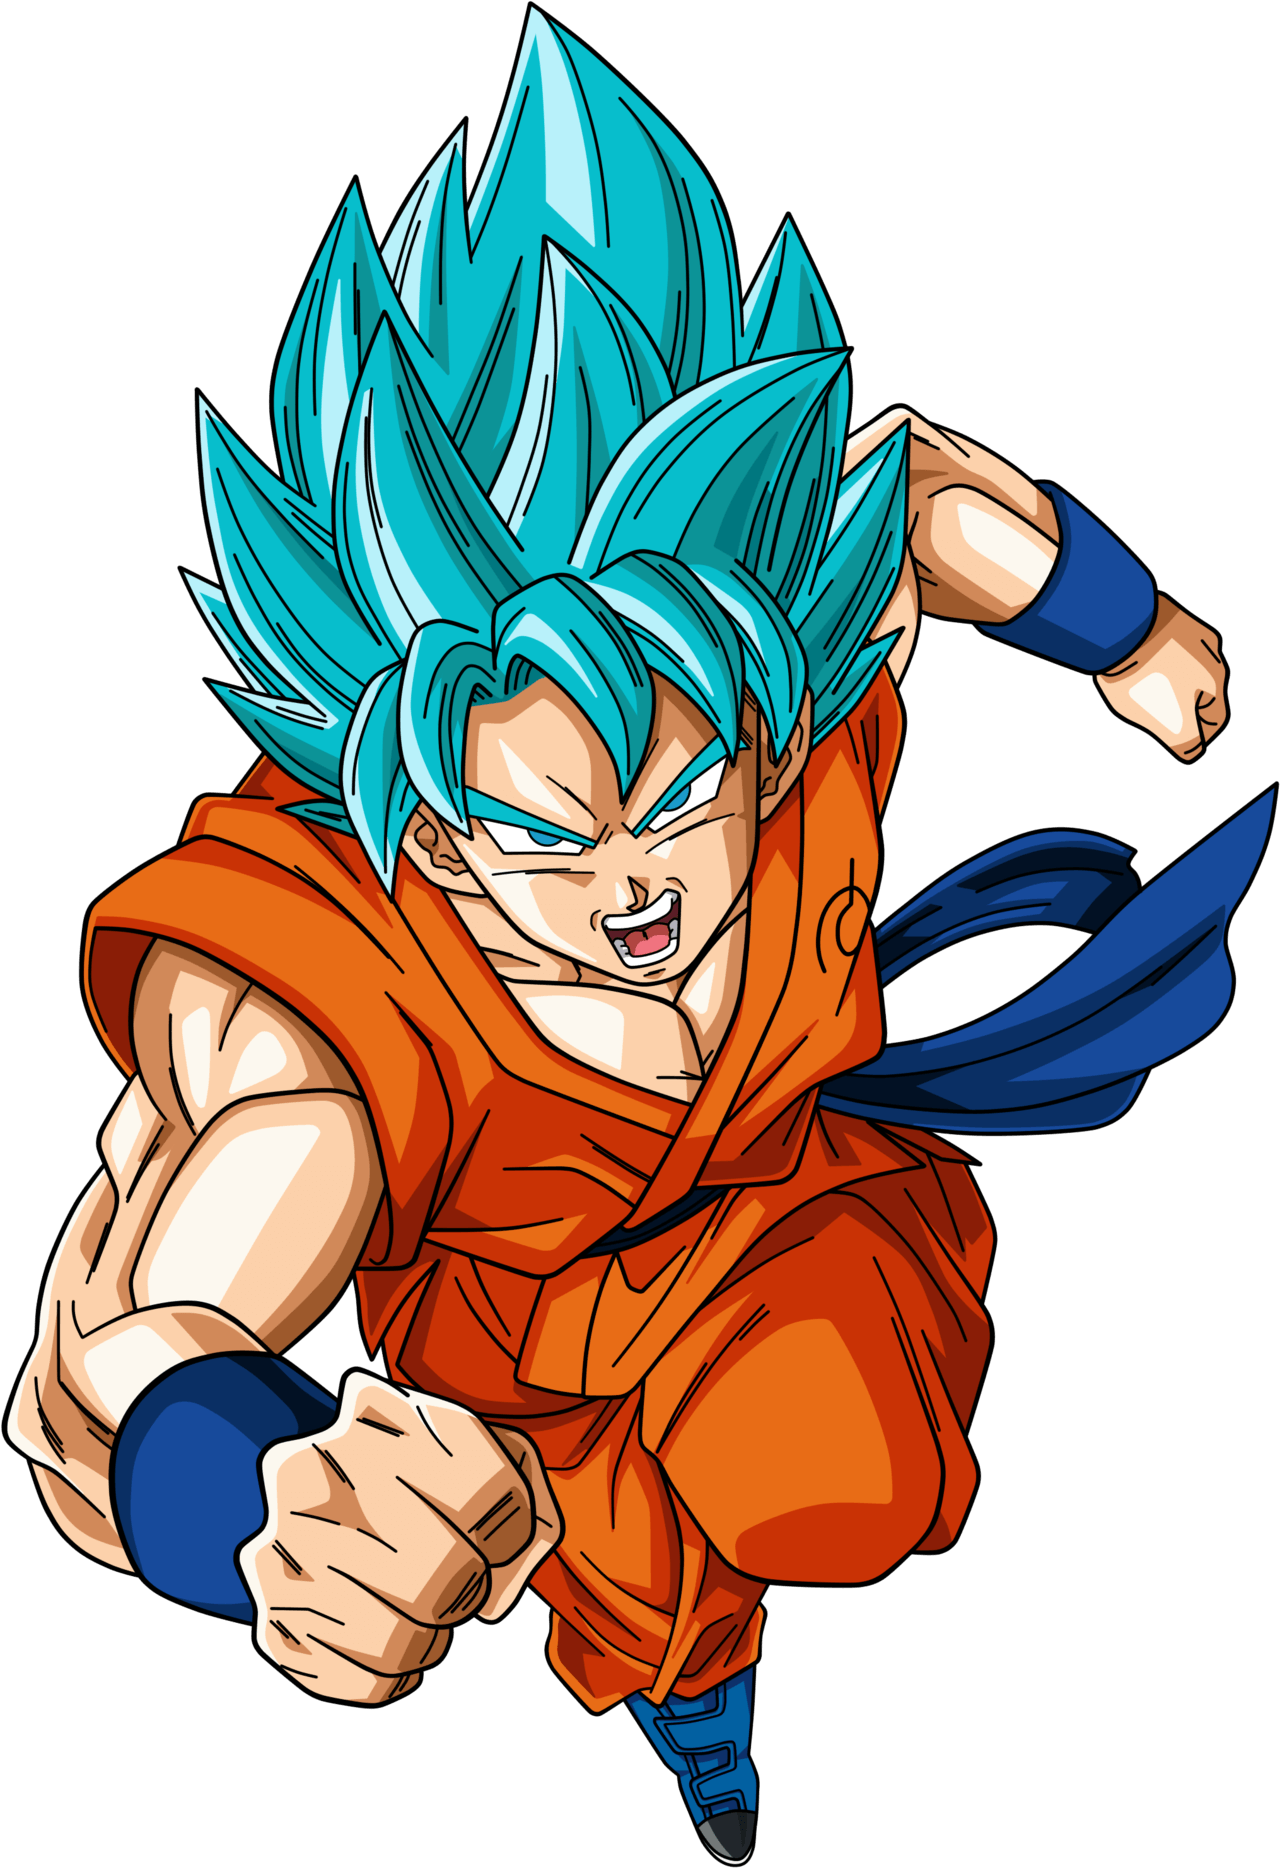 Déguisement Goku homme Dragon Ball Z - Magie du Déguisement - Manga  Super-Héros